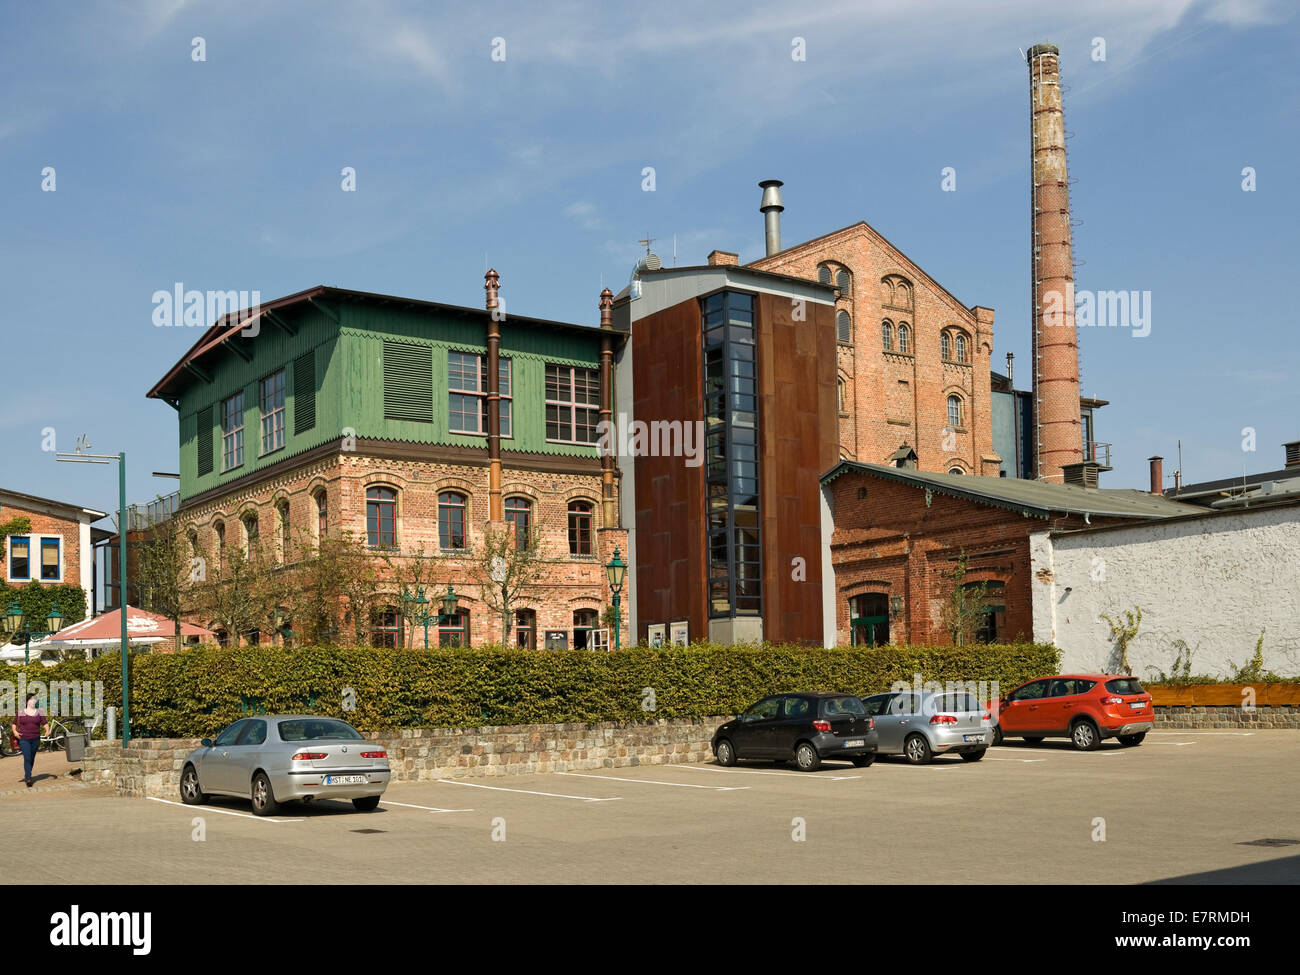 The old 'Stralsunder beer' brewery in Stralsund, Mecklenburg Vorpommern, Germany, now the 'Stortebeker' visitor centre & pub. Stock Photo